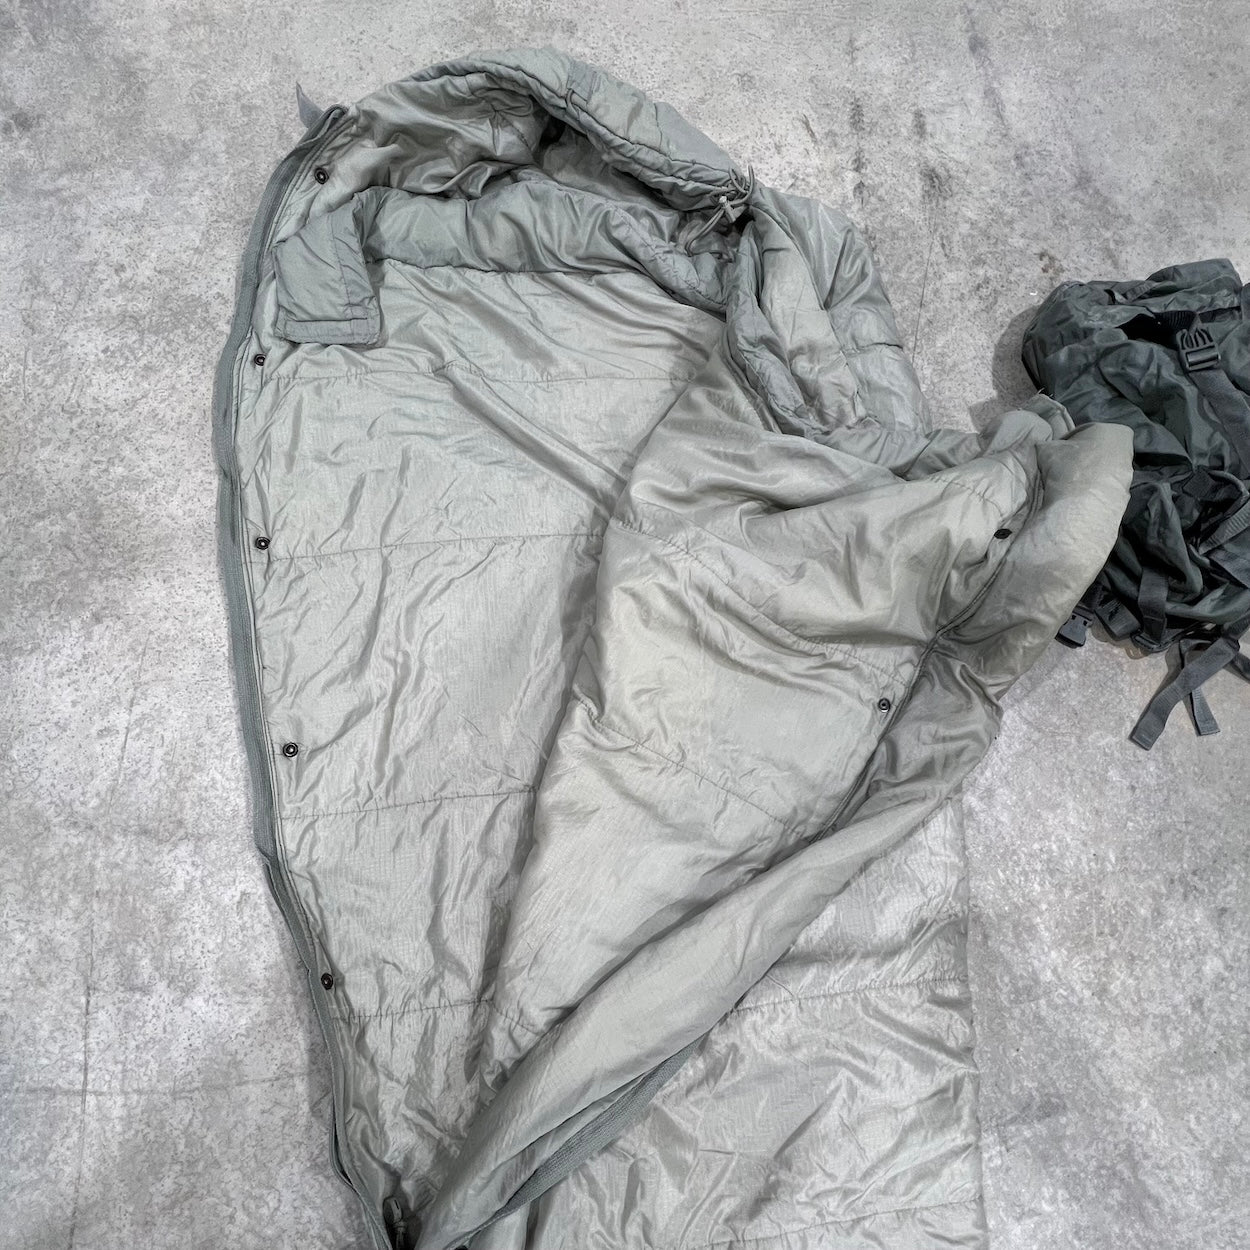 US Military Sleeping Bag Set Mummy Style With Stuff Sac